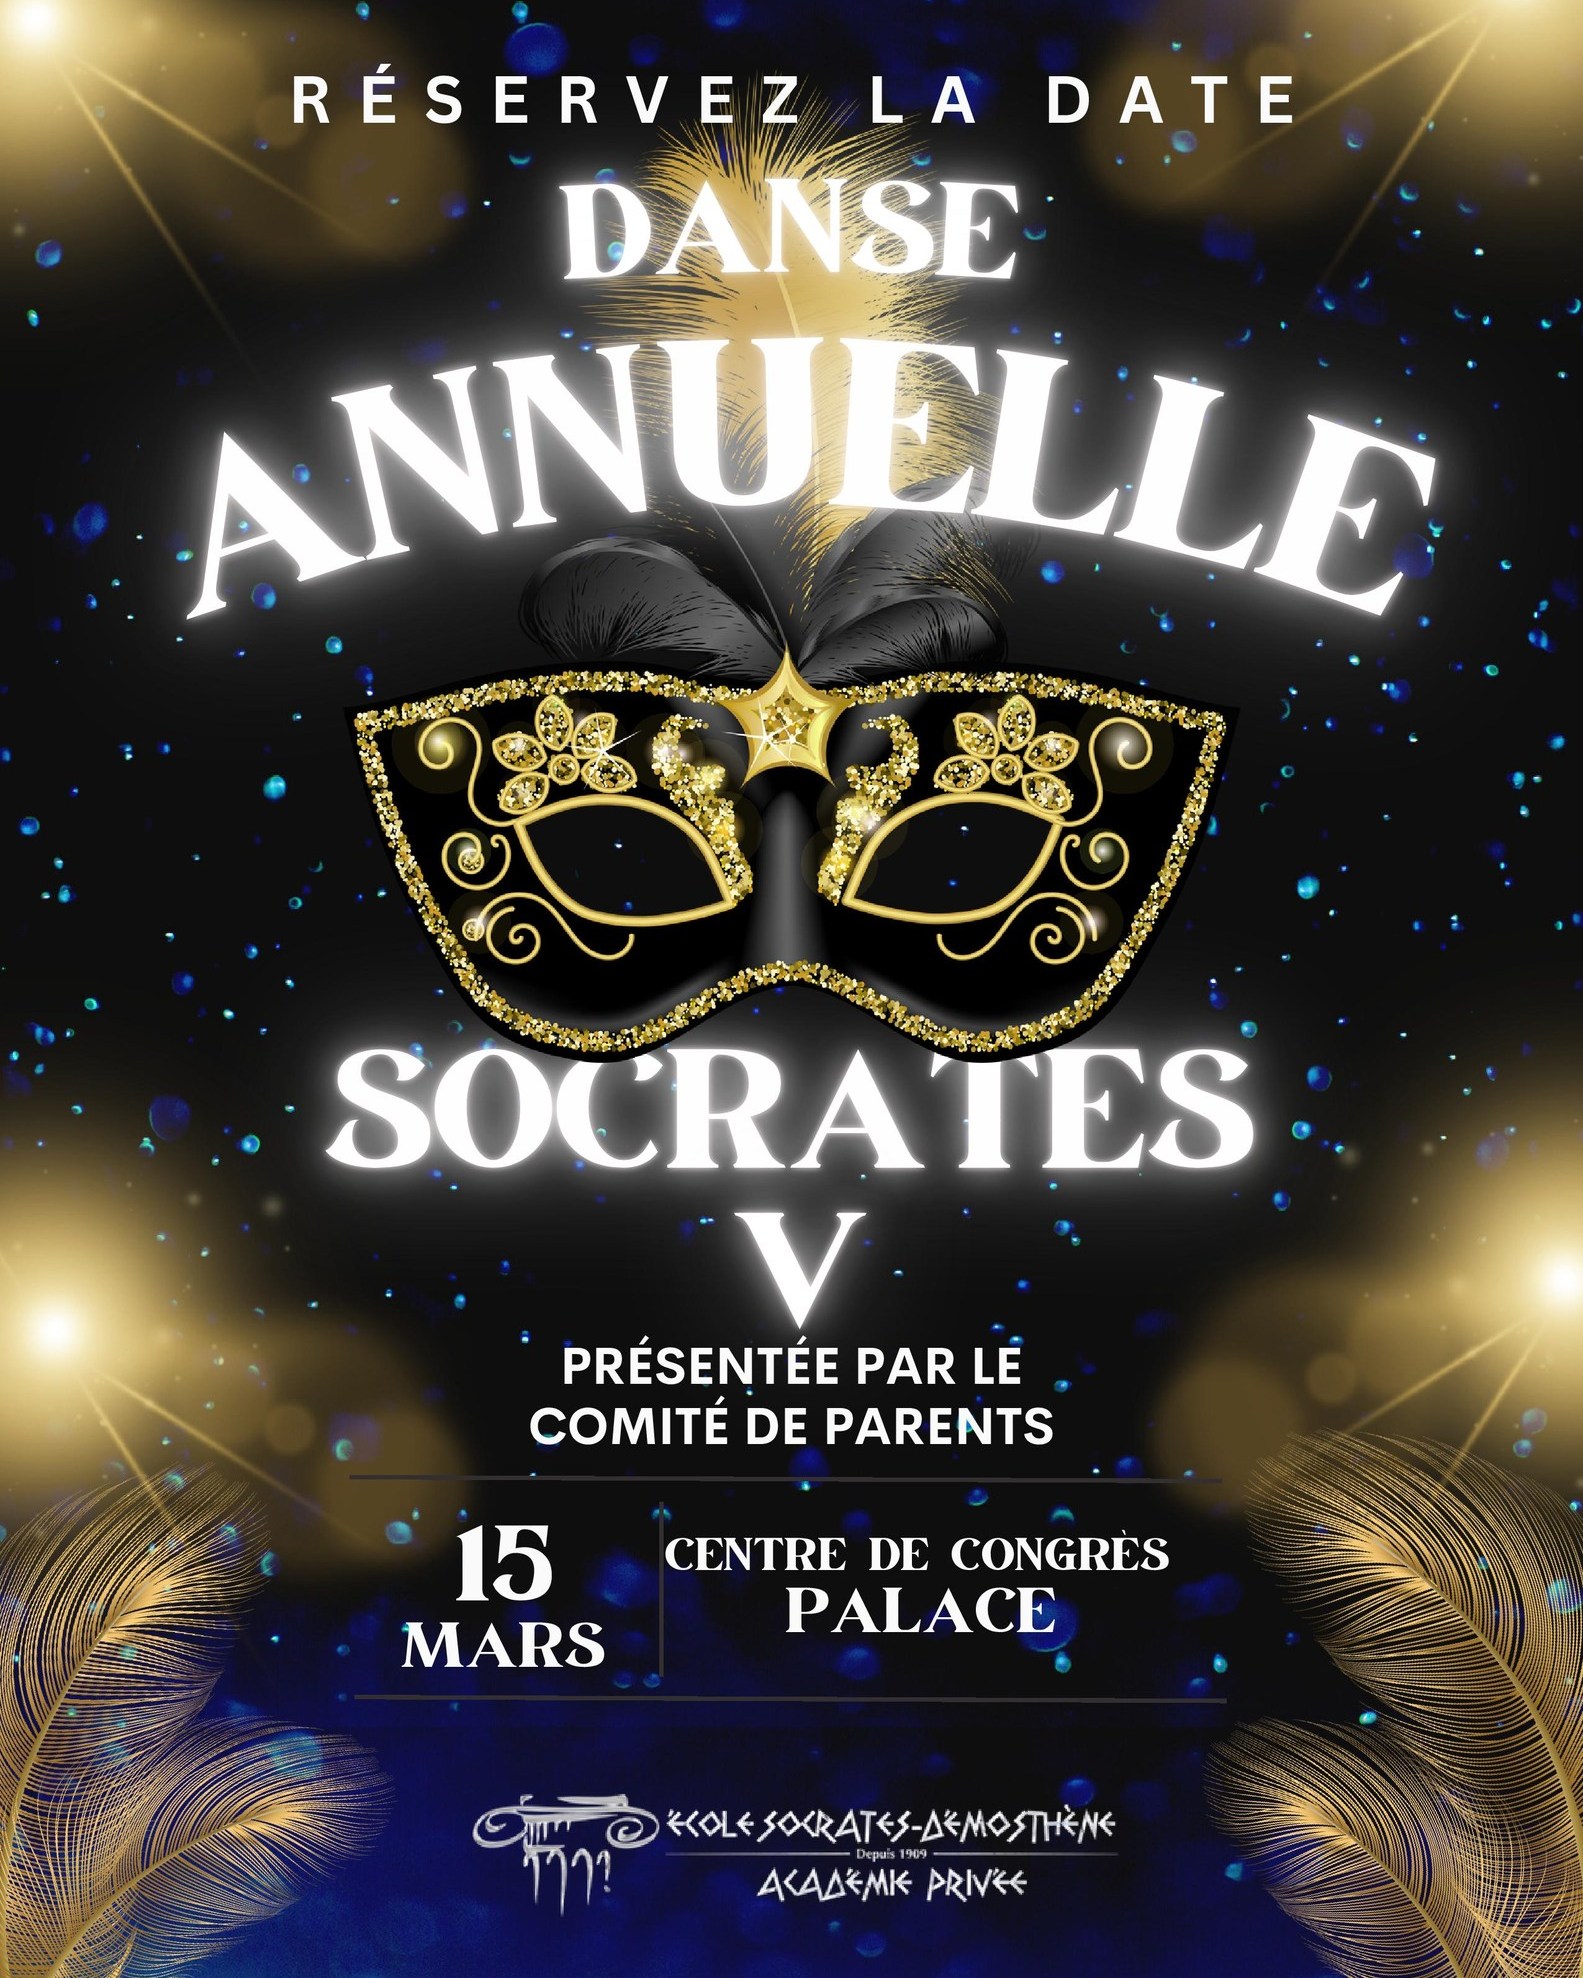 🪩🎵 Danse Annuelle – Socrates V 💃🕺